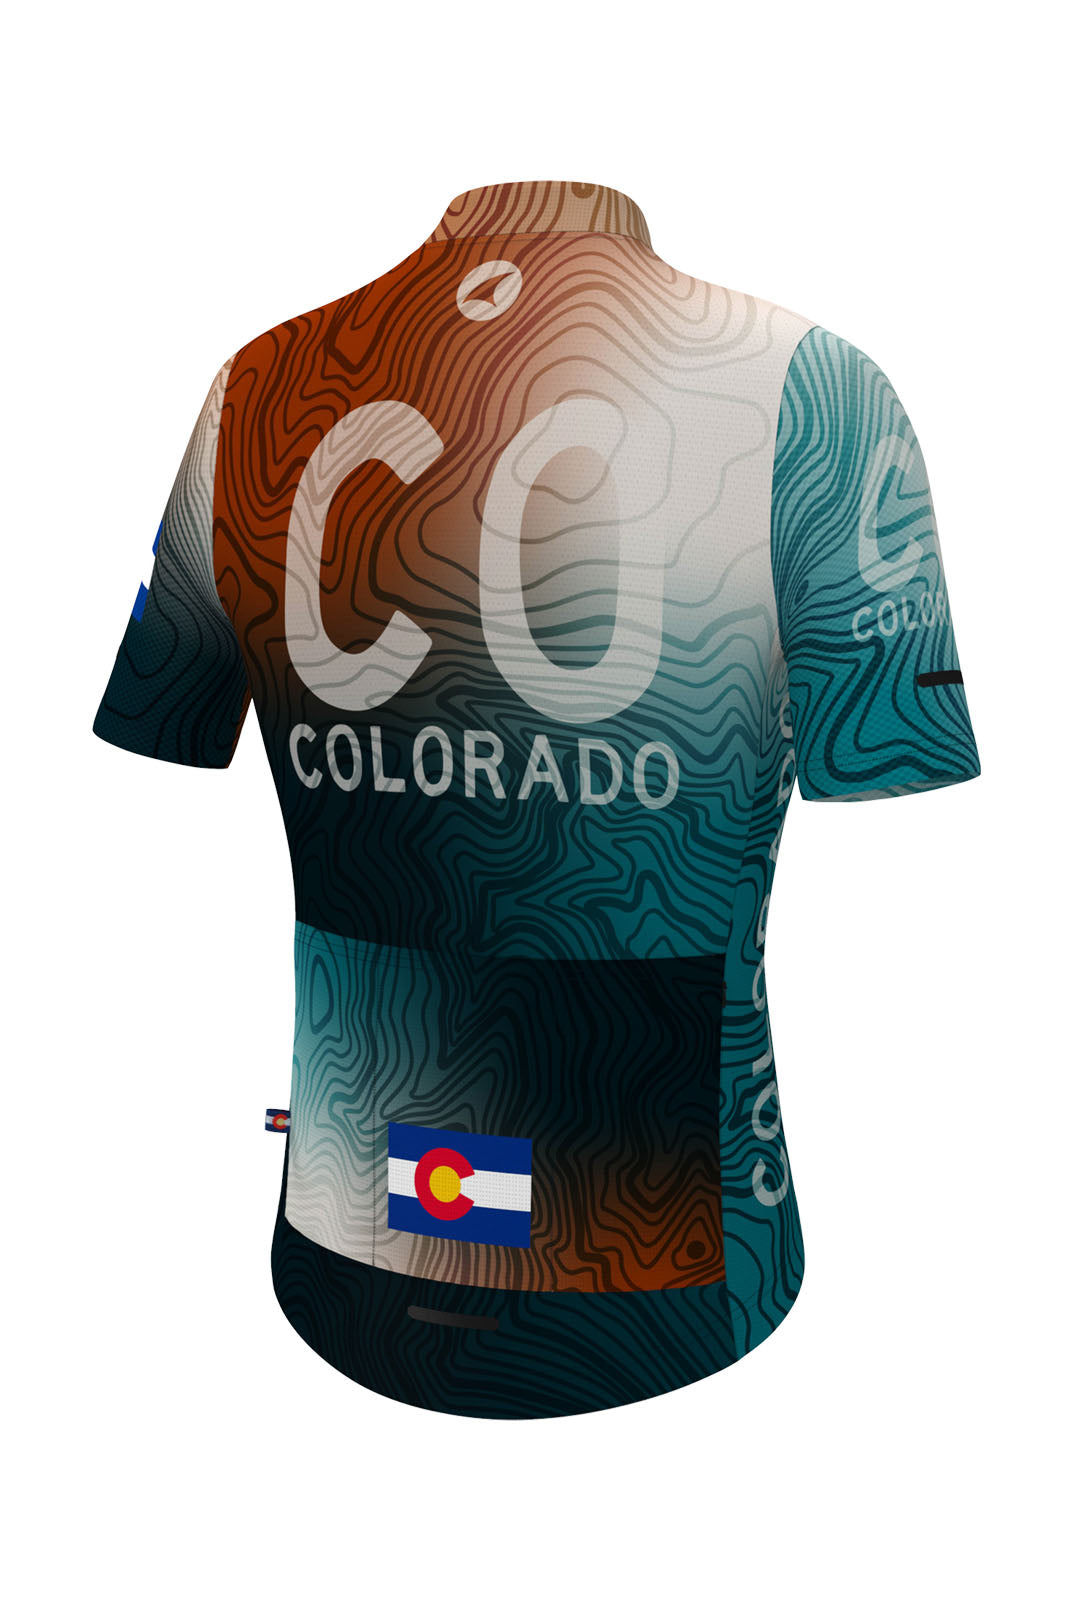 Women's Colorado Geo Cycling Jersey - Back View